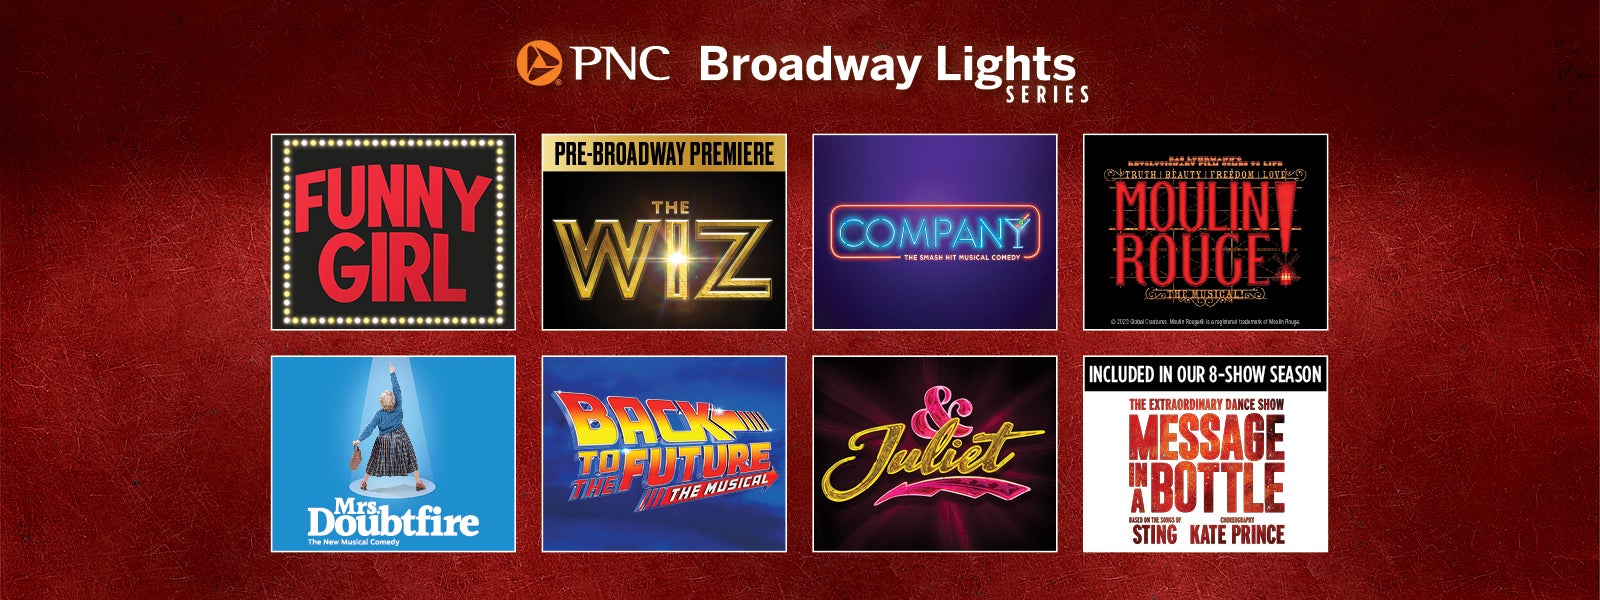 202324 PNC Broadway Lights Blumenthal Arts